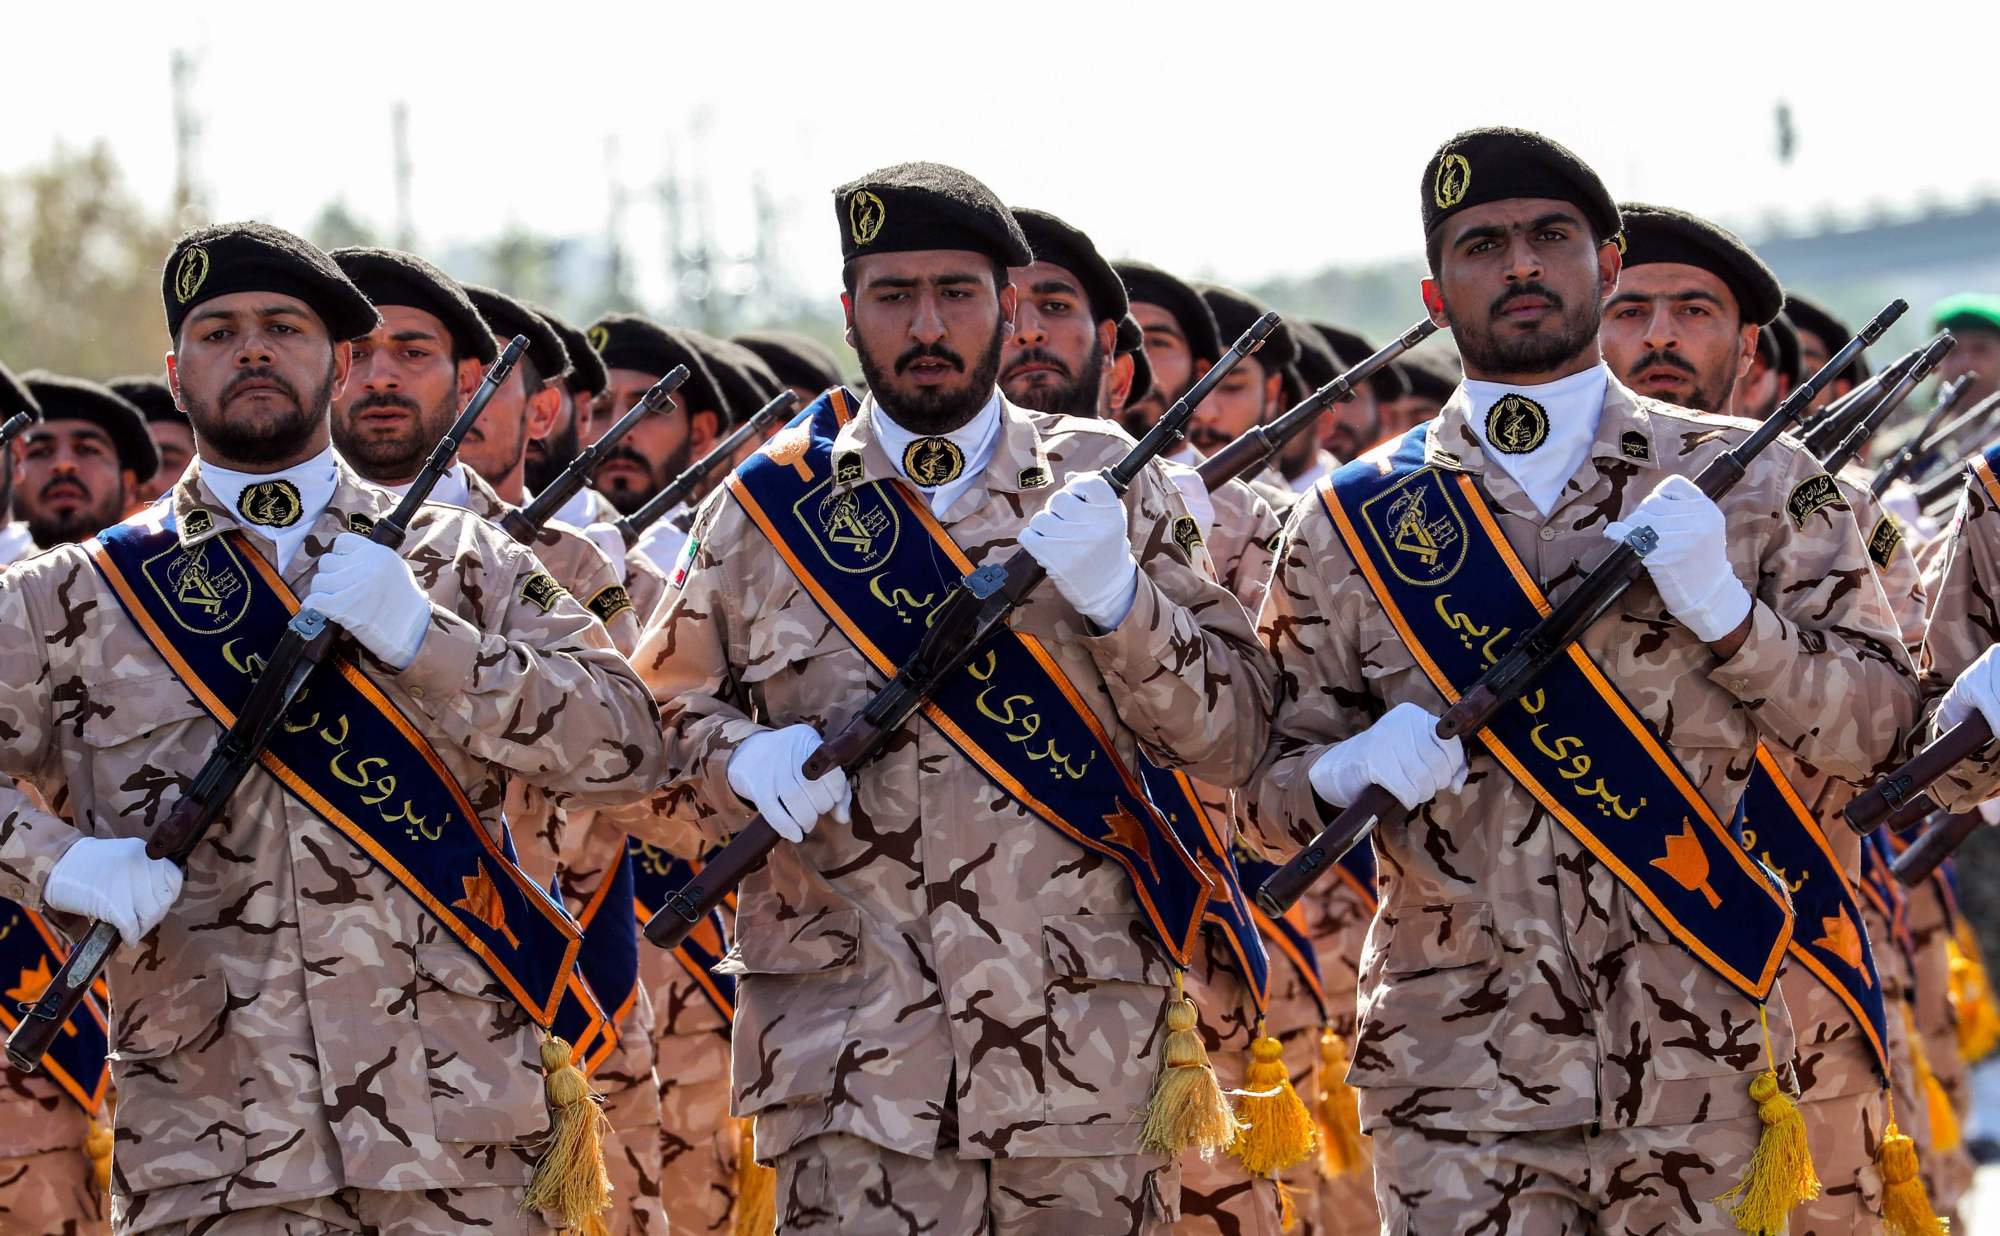 EU parliament votes to list IRGCs as terrorist group